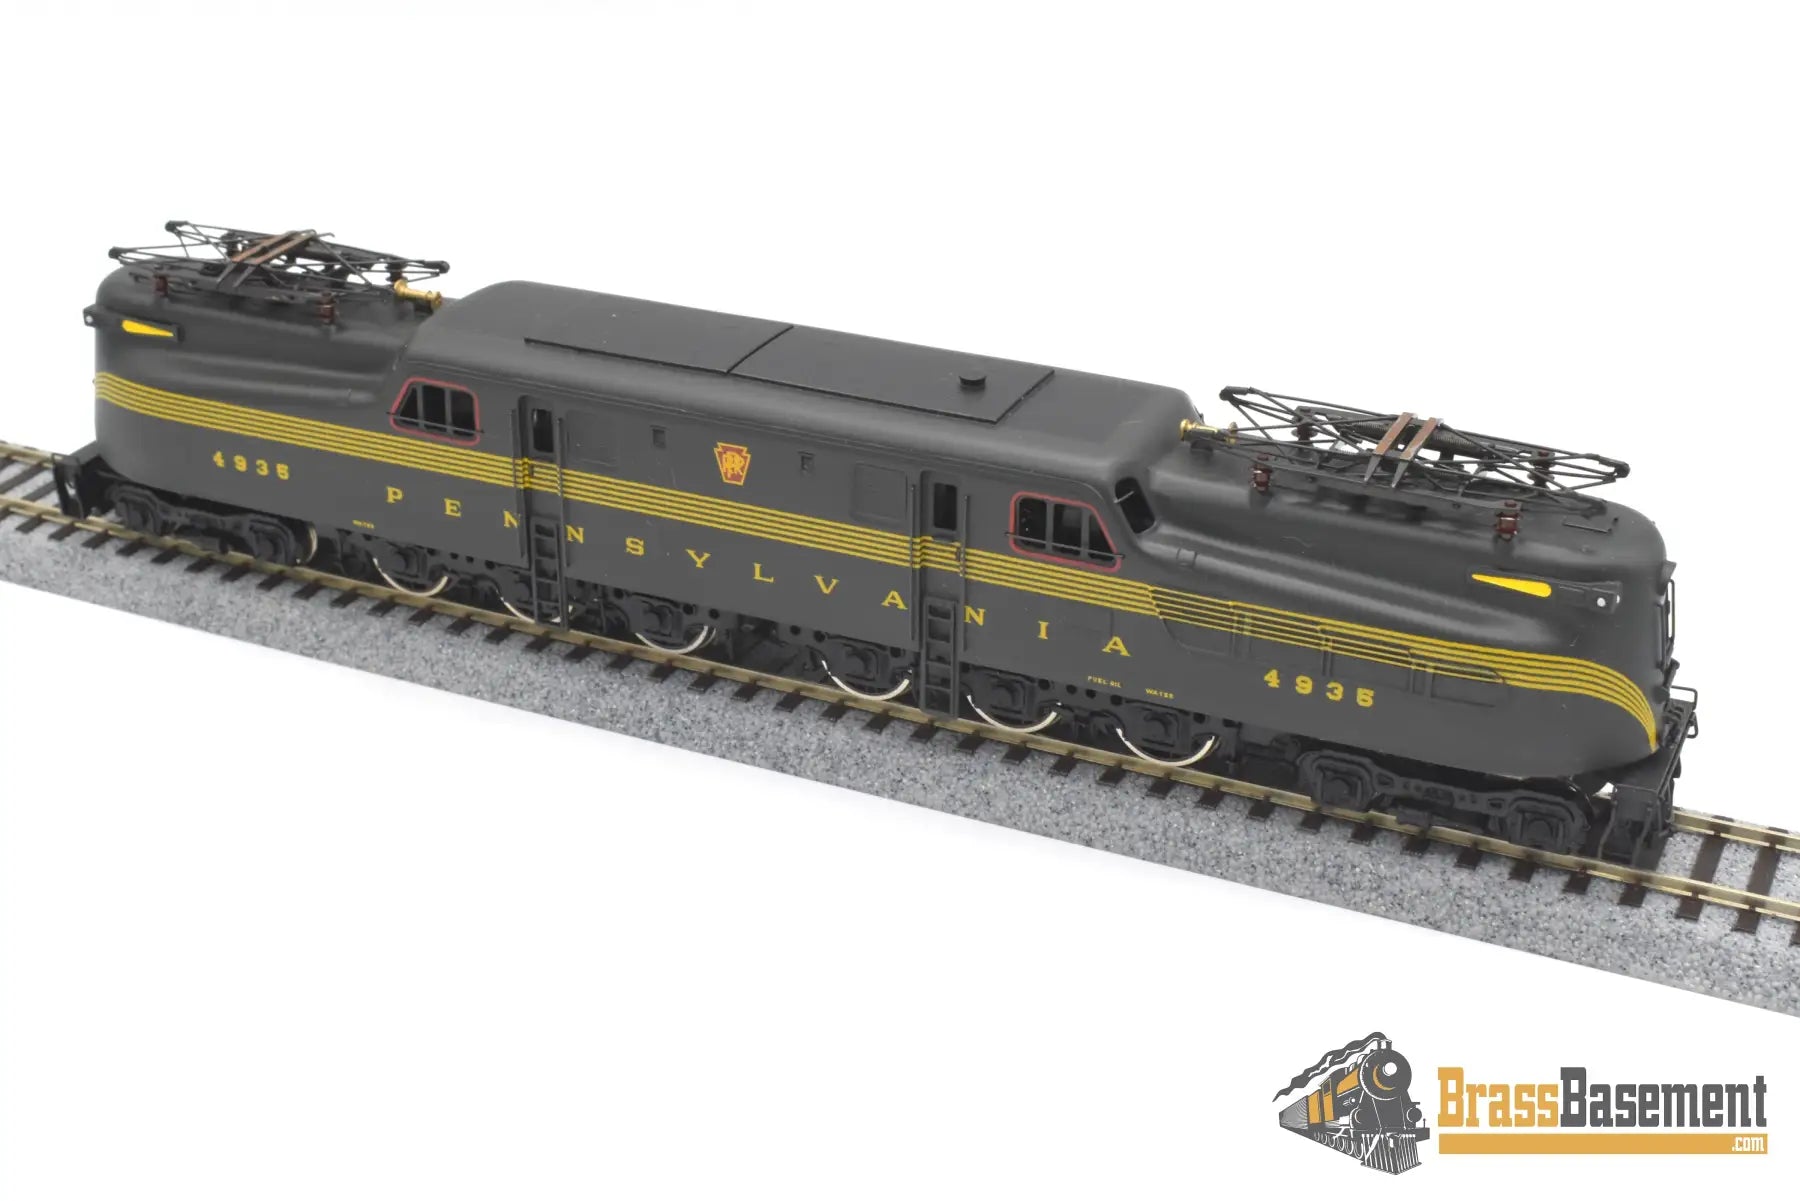 Ho Brass - Key Imports Prr Pennsylvania Railroad Gg1 Electric #4935 5 Stripe Runs Well